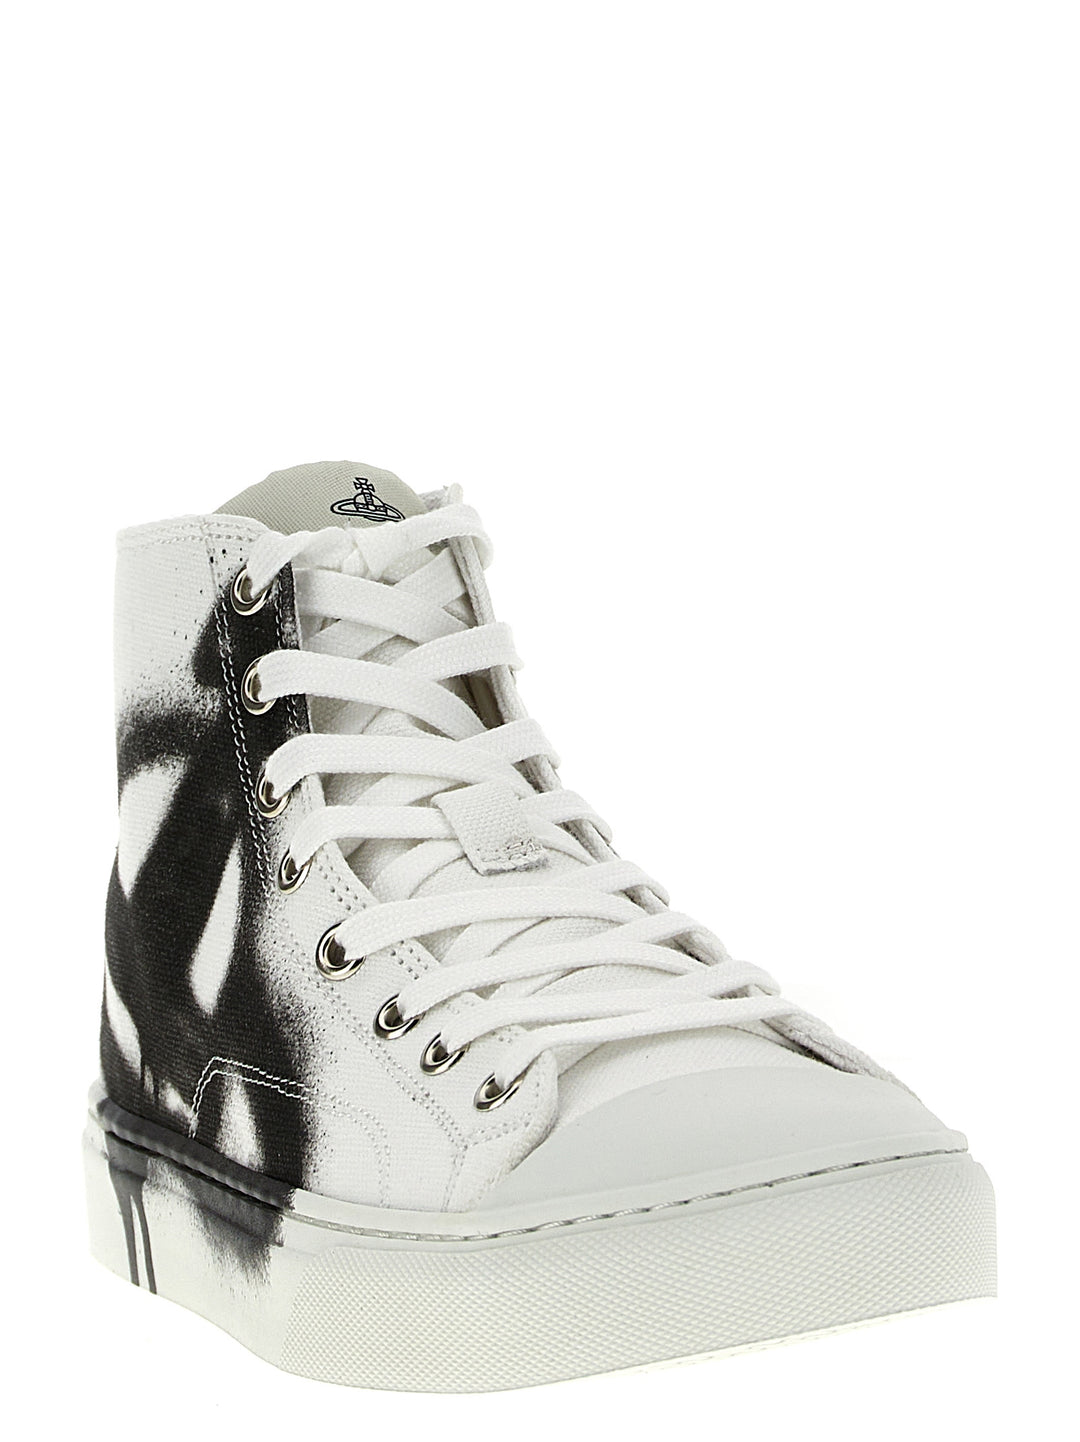 Plimsoll Sneakers Bianco/Nero